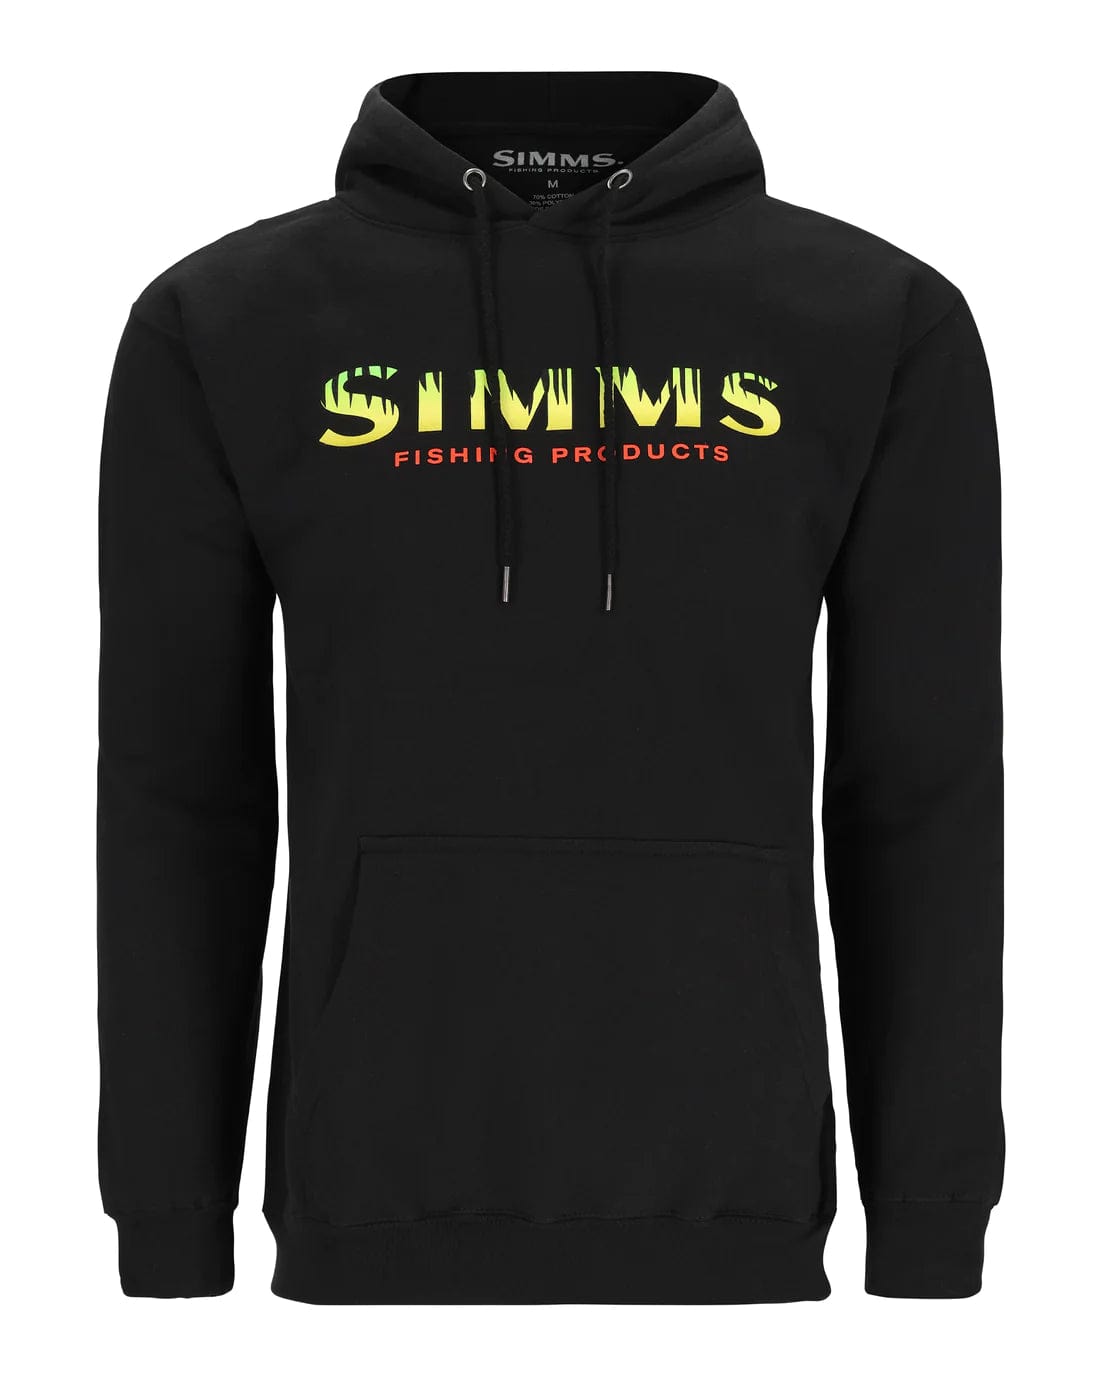 Simms Camo Fishing Hoodie - Size M Thru 2XL - Color Black or Grey